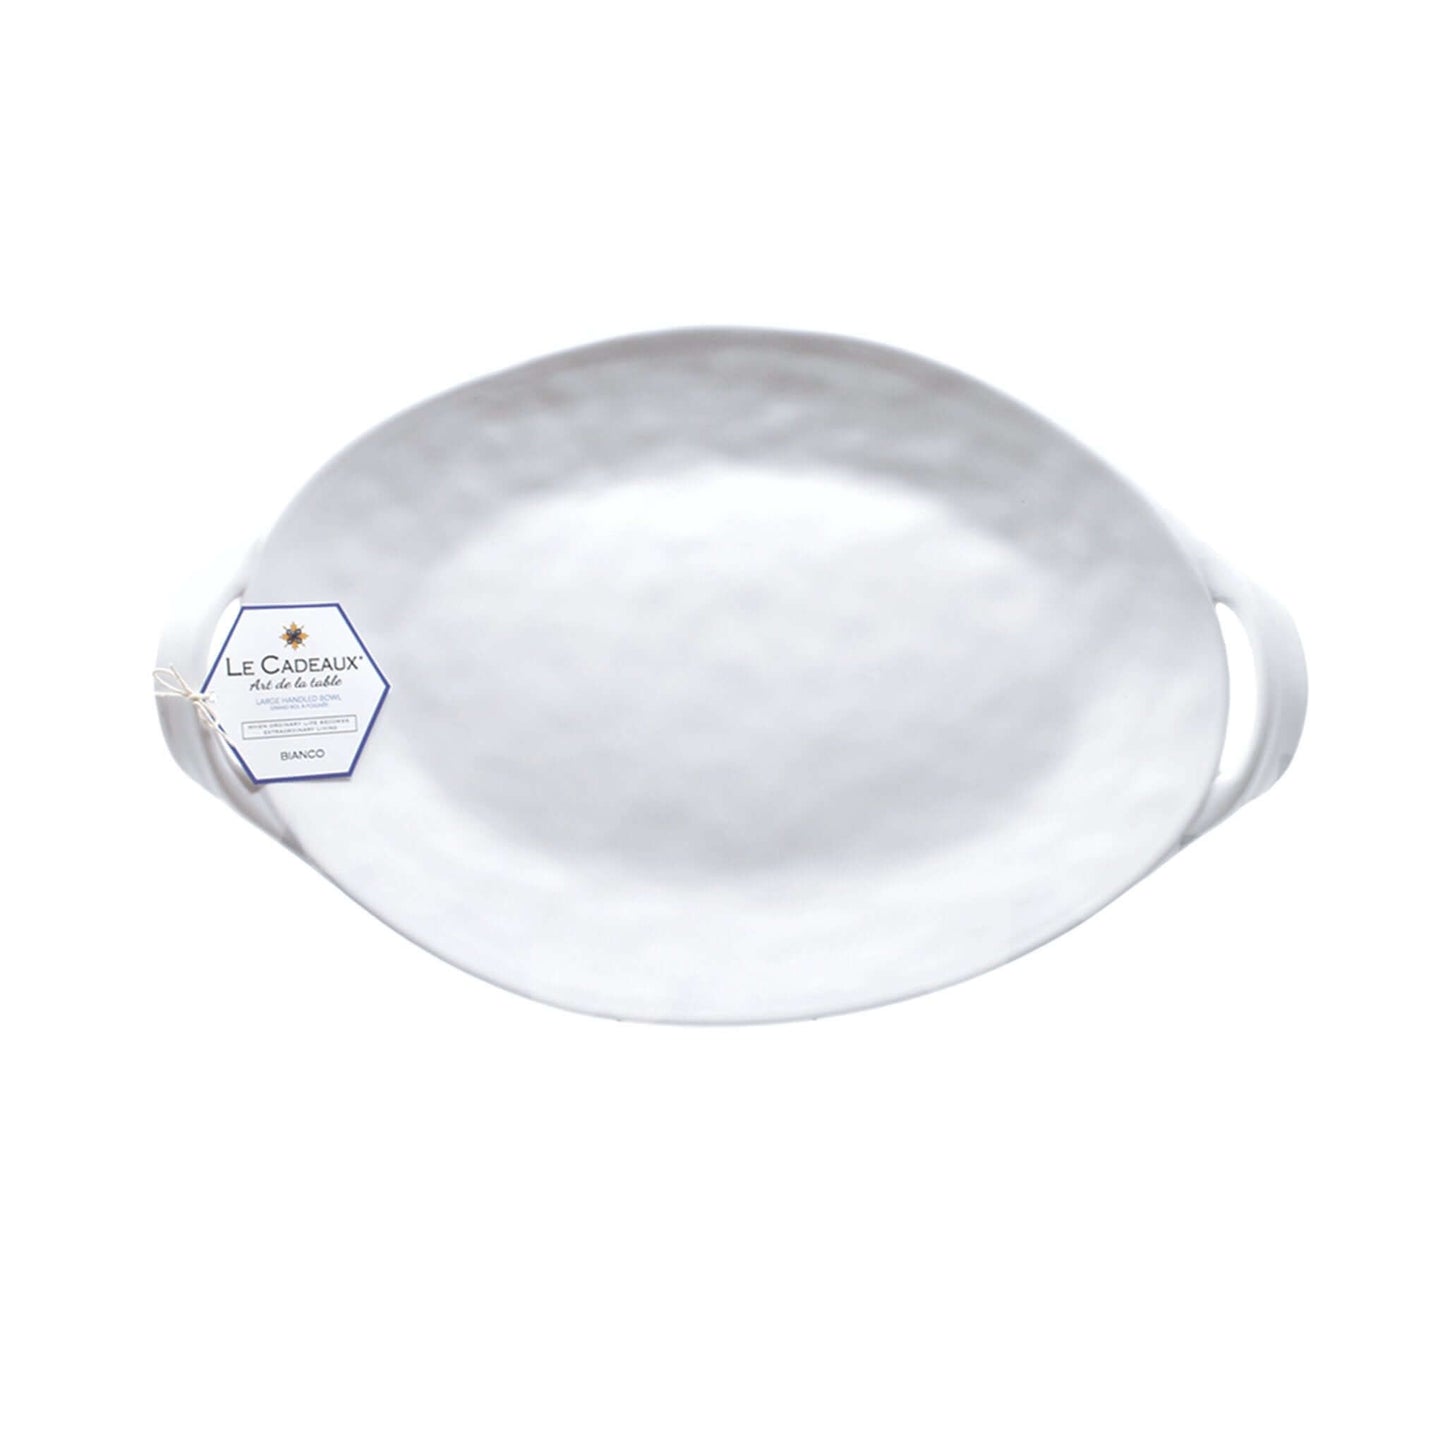 Bianco Small Two Handled Platter - Royalties